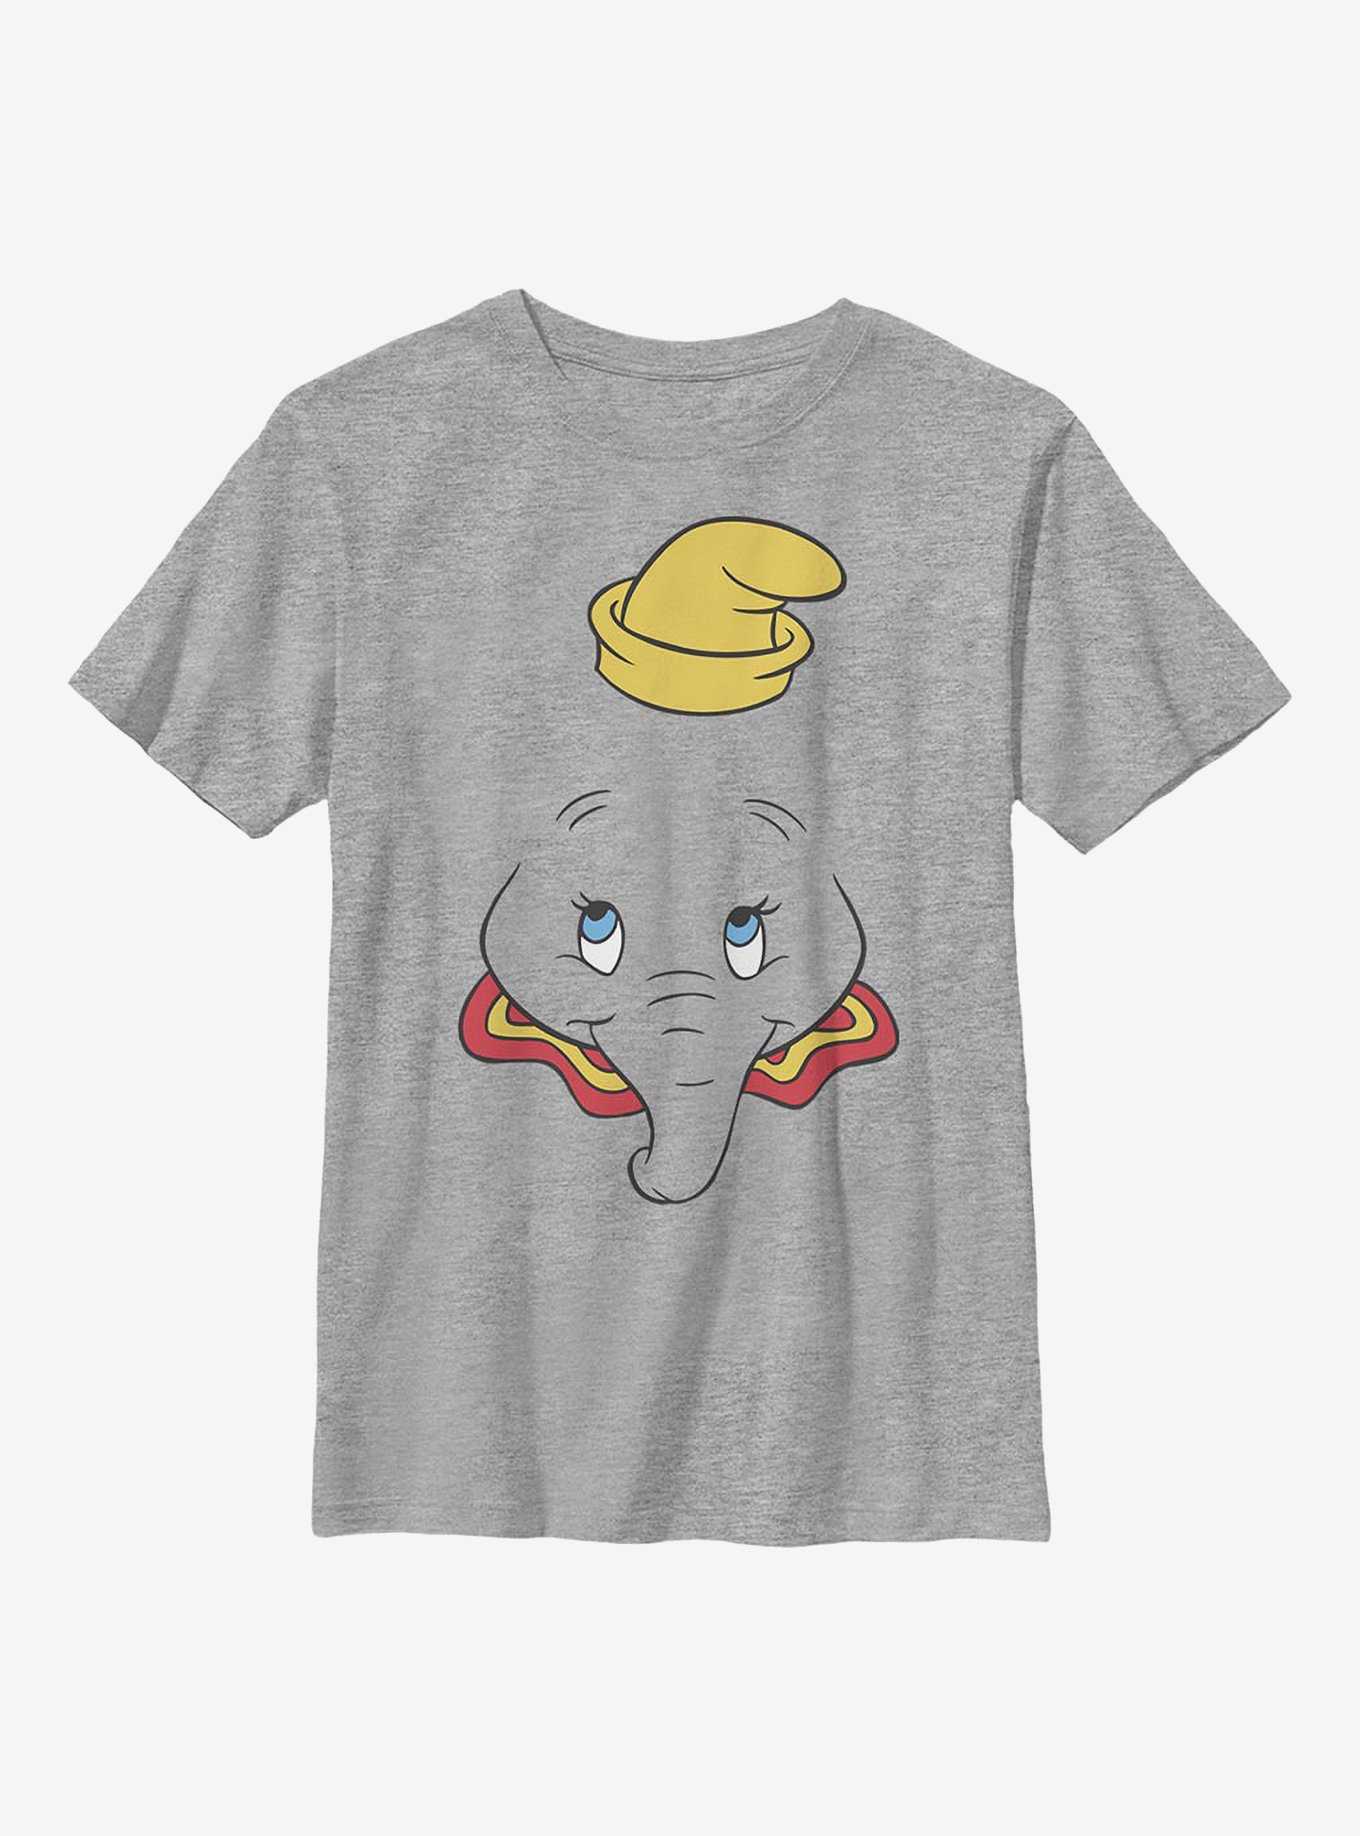 Disney Dumbo Big Face Youth T-Shirt, , hi-res